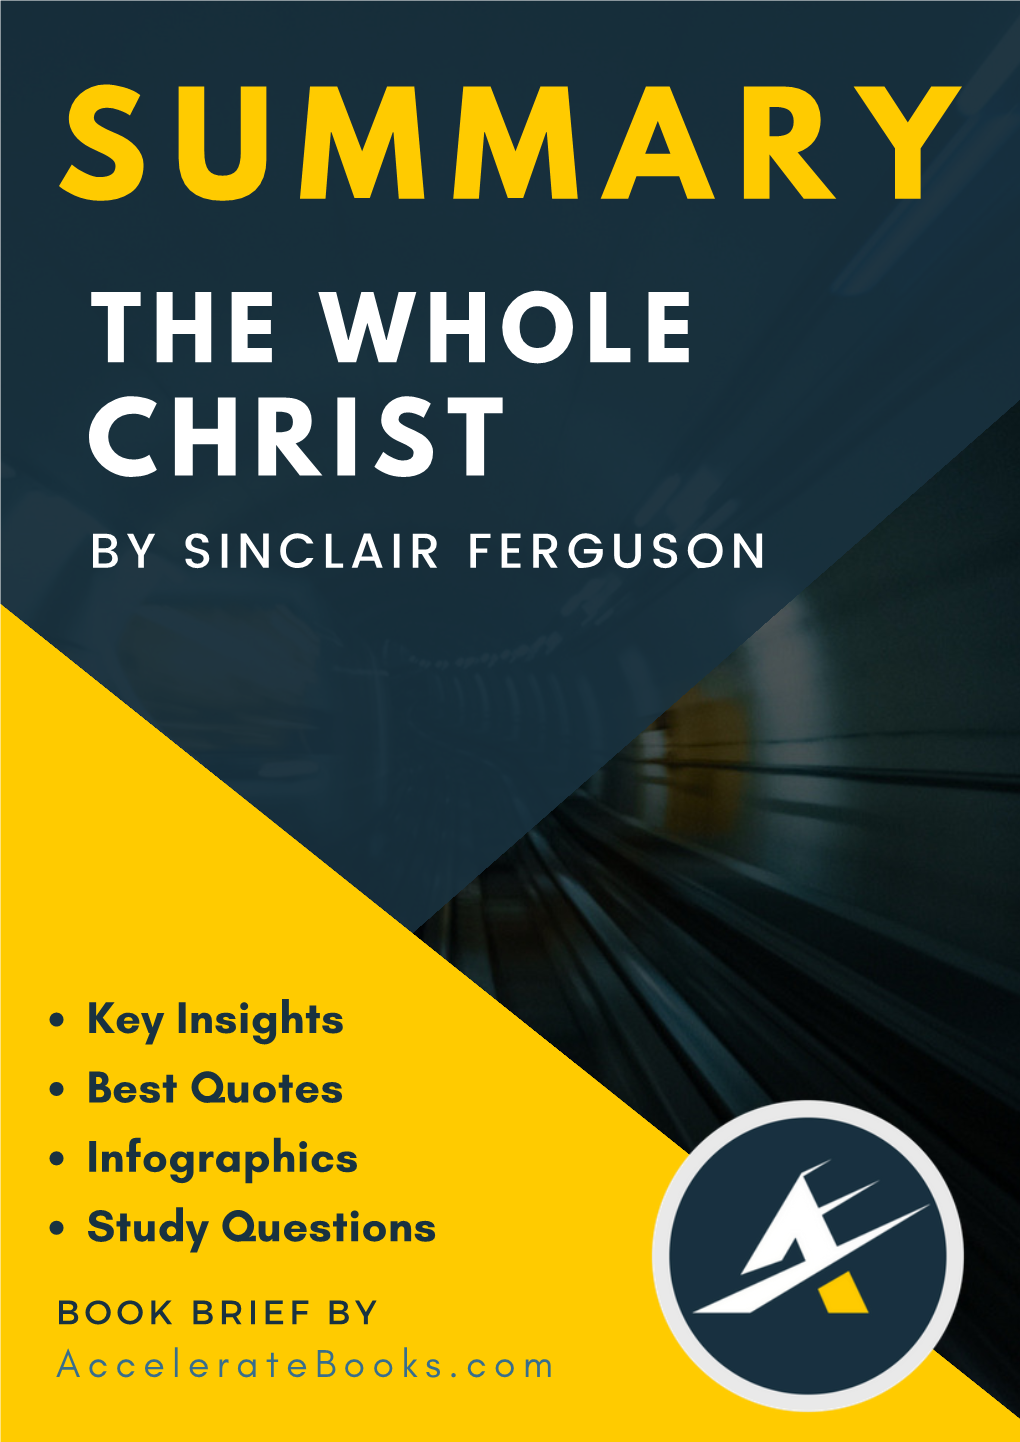 The Whole Christ by Sinclair Ferguson